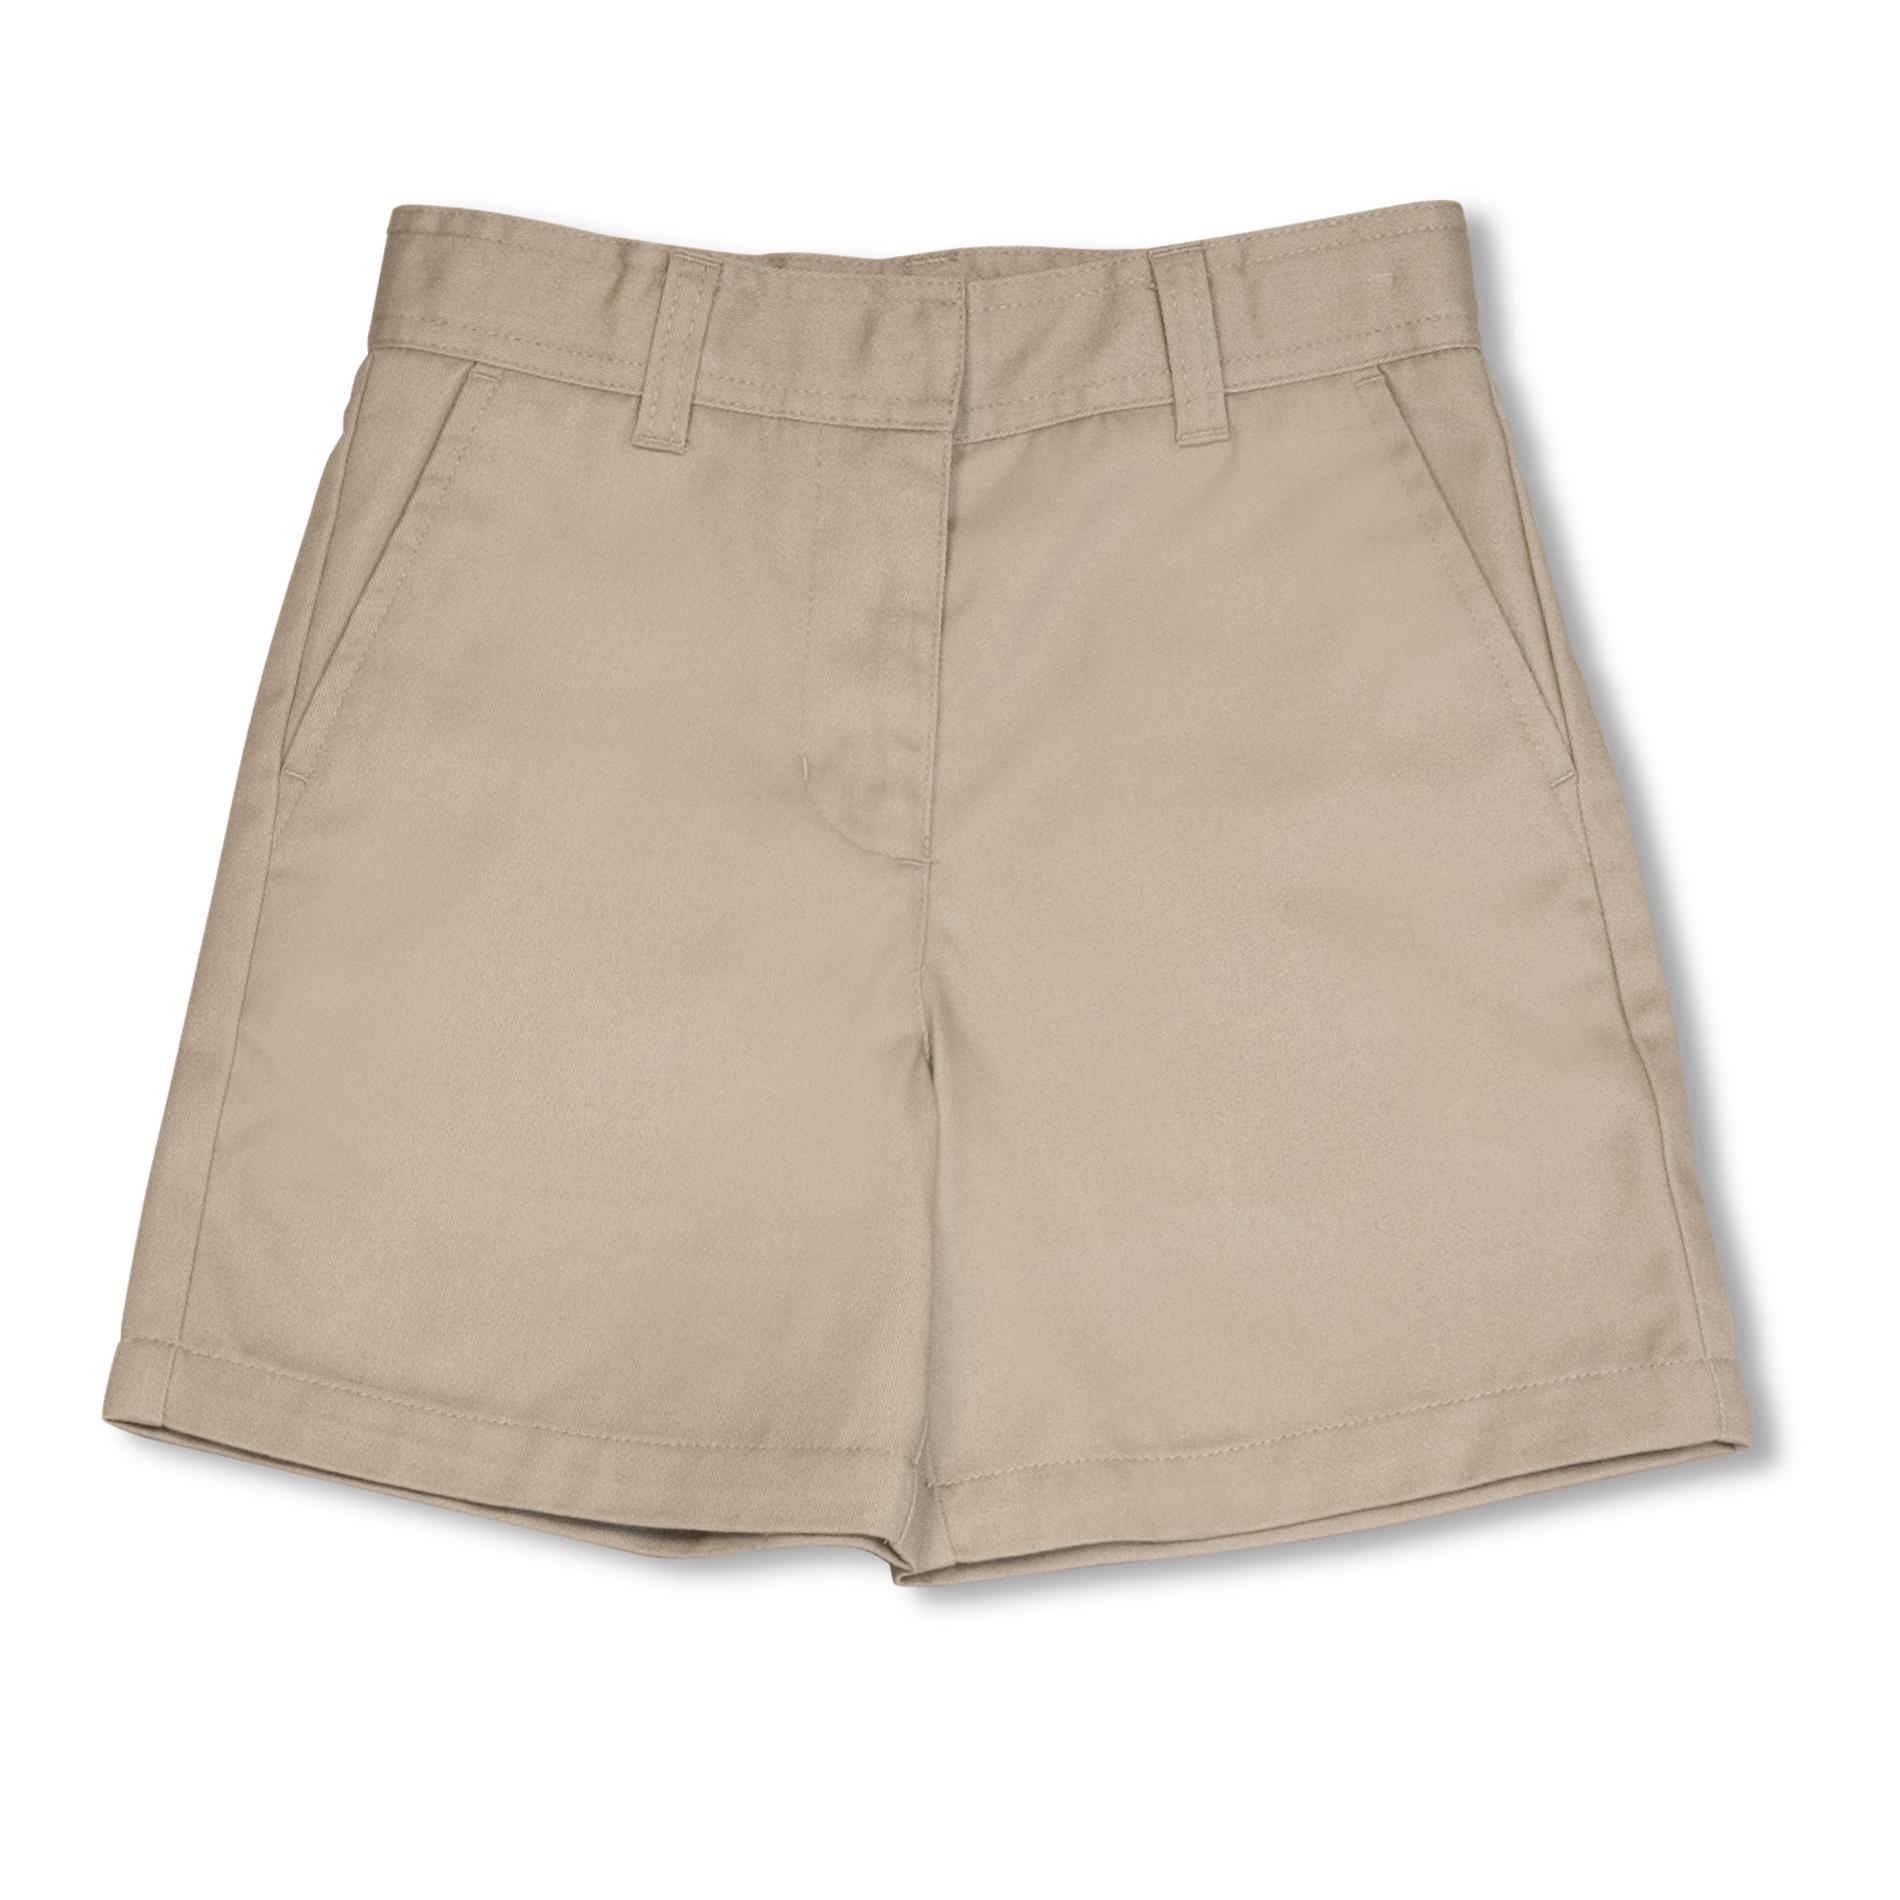 Dockers Girl's Uniform Shorts - Flat Front - Khaki